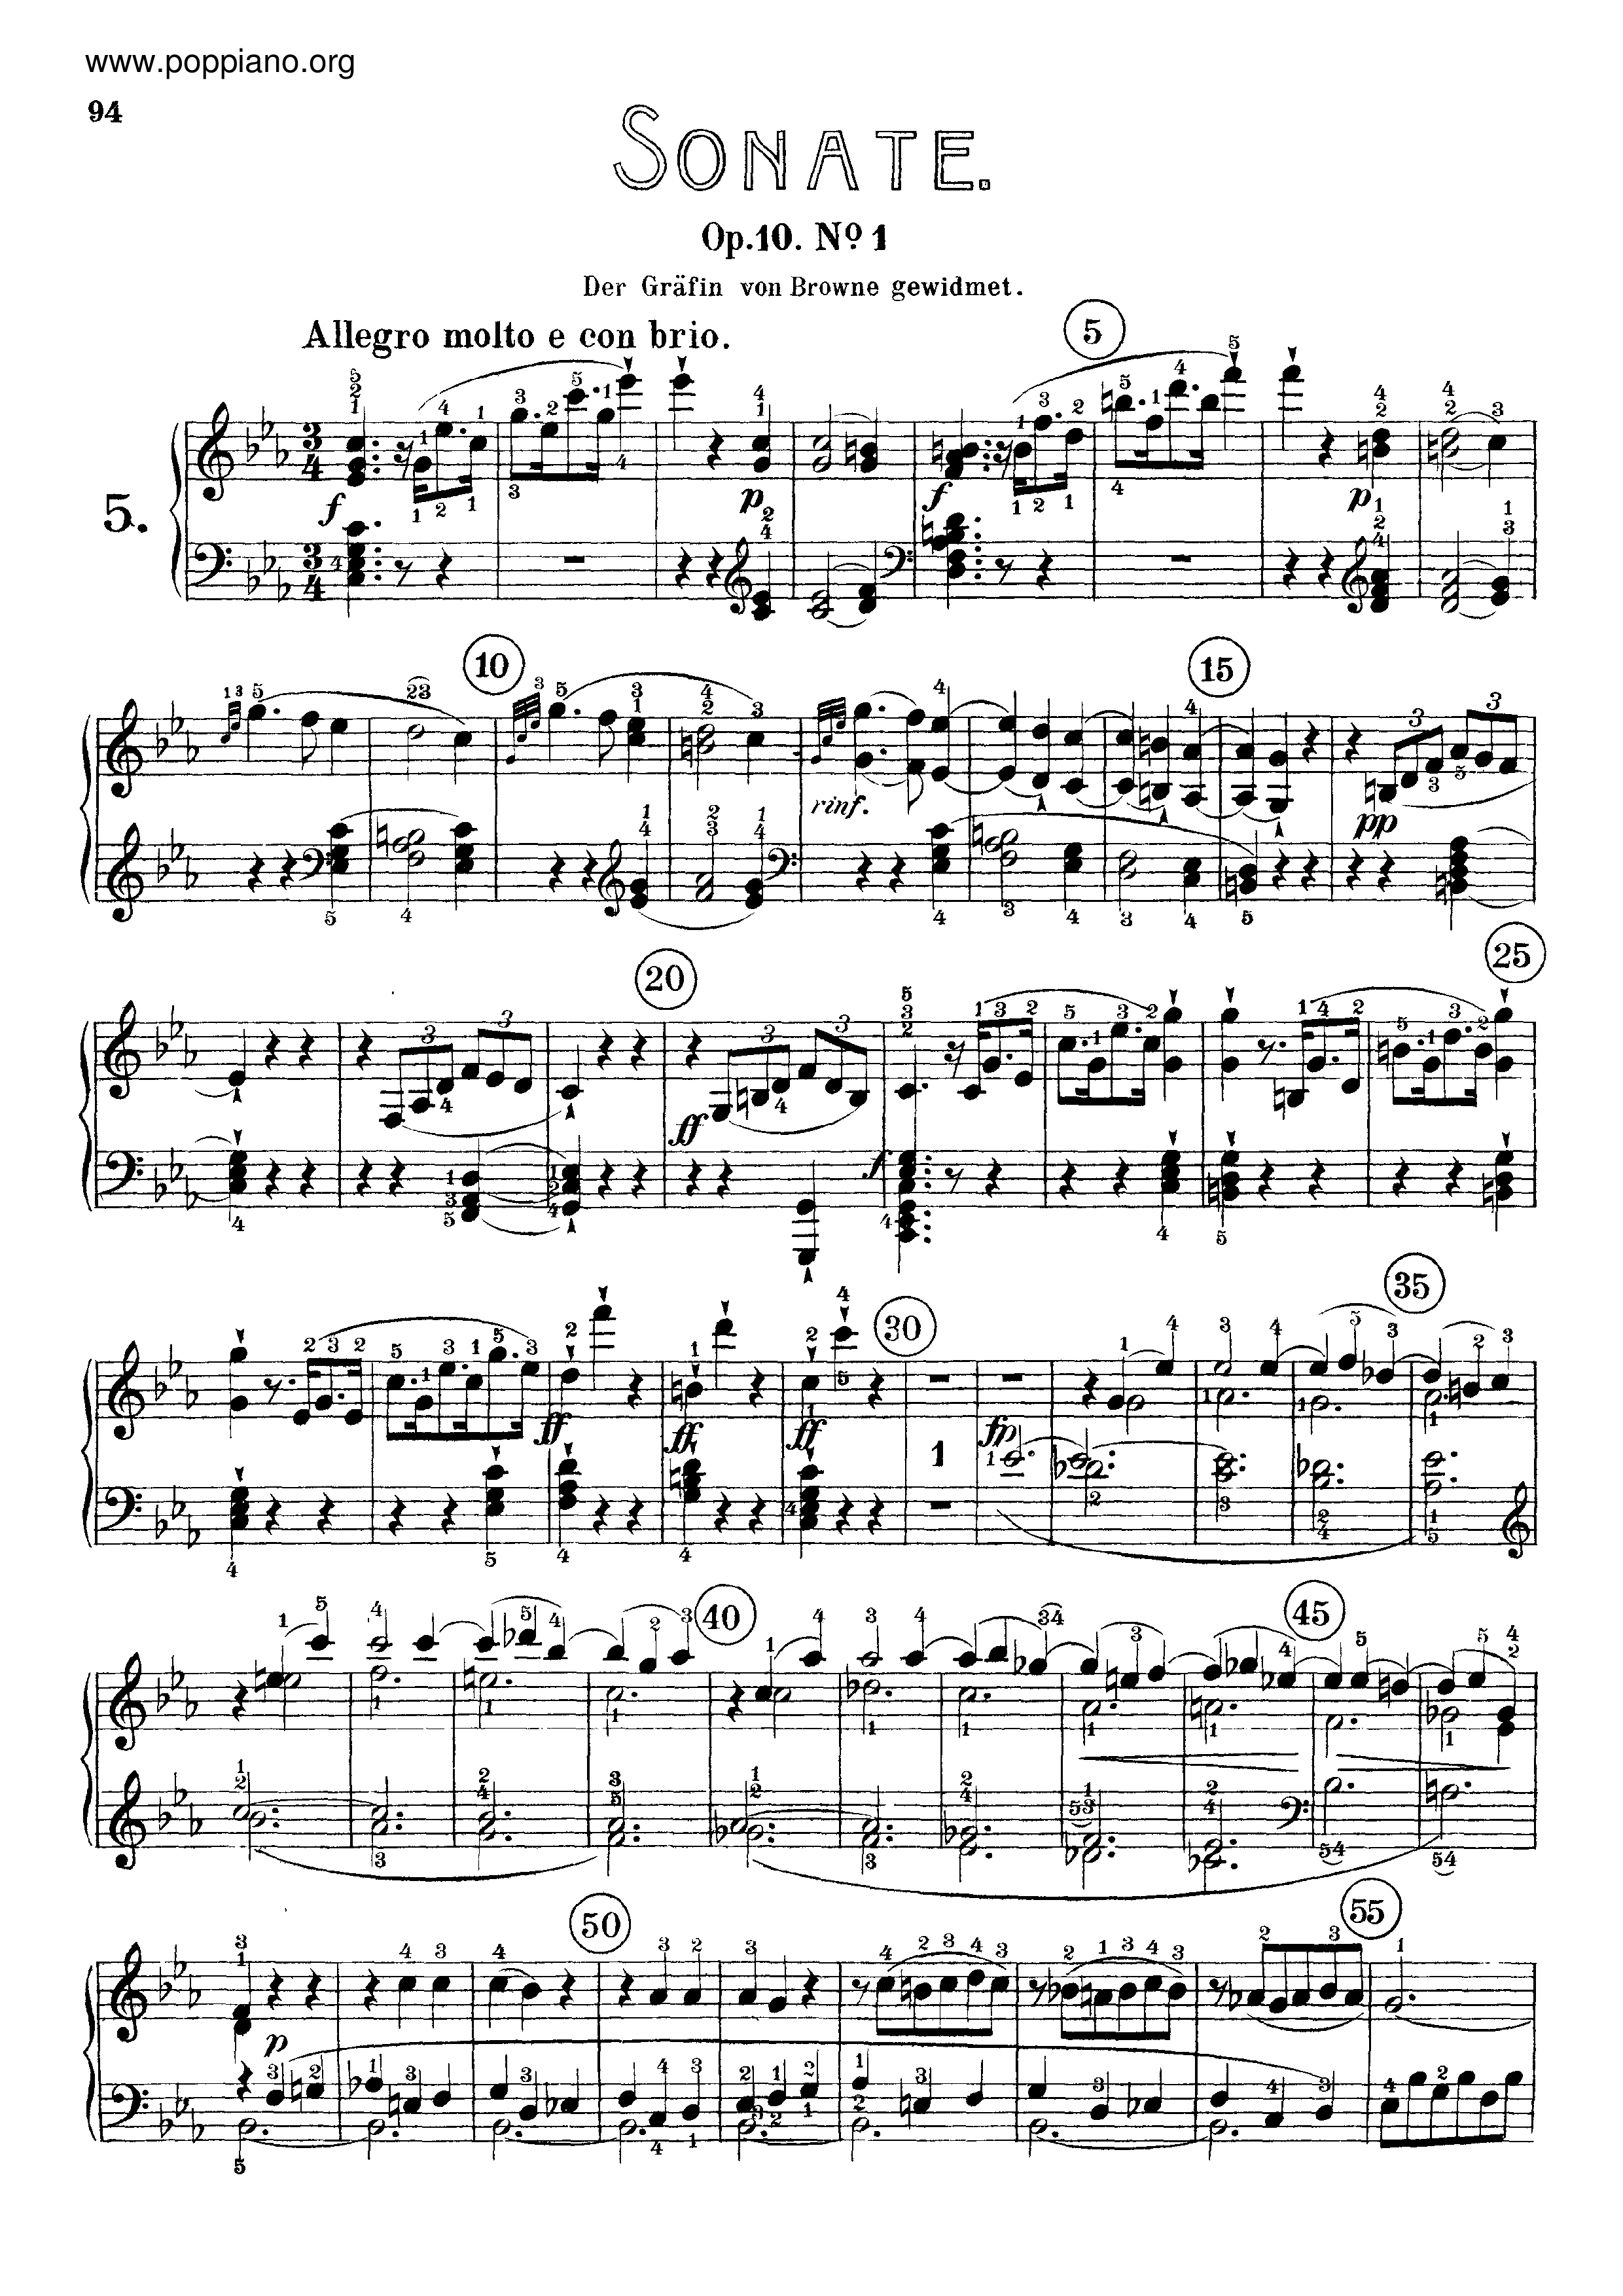 Sonata No. 5 in C minorピアノ譜